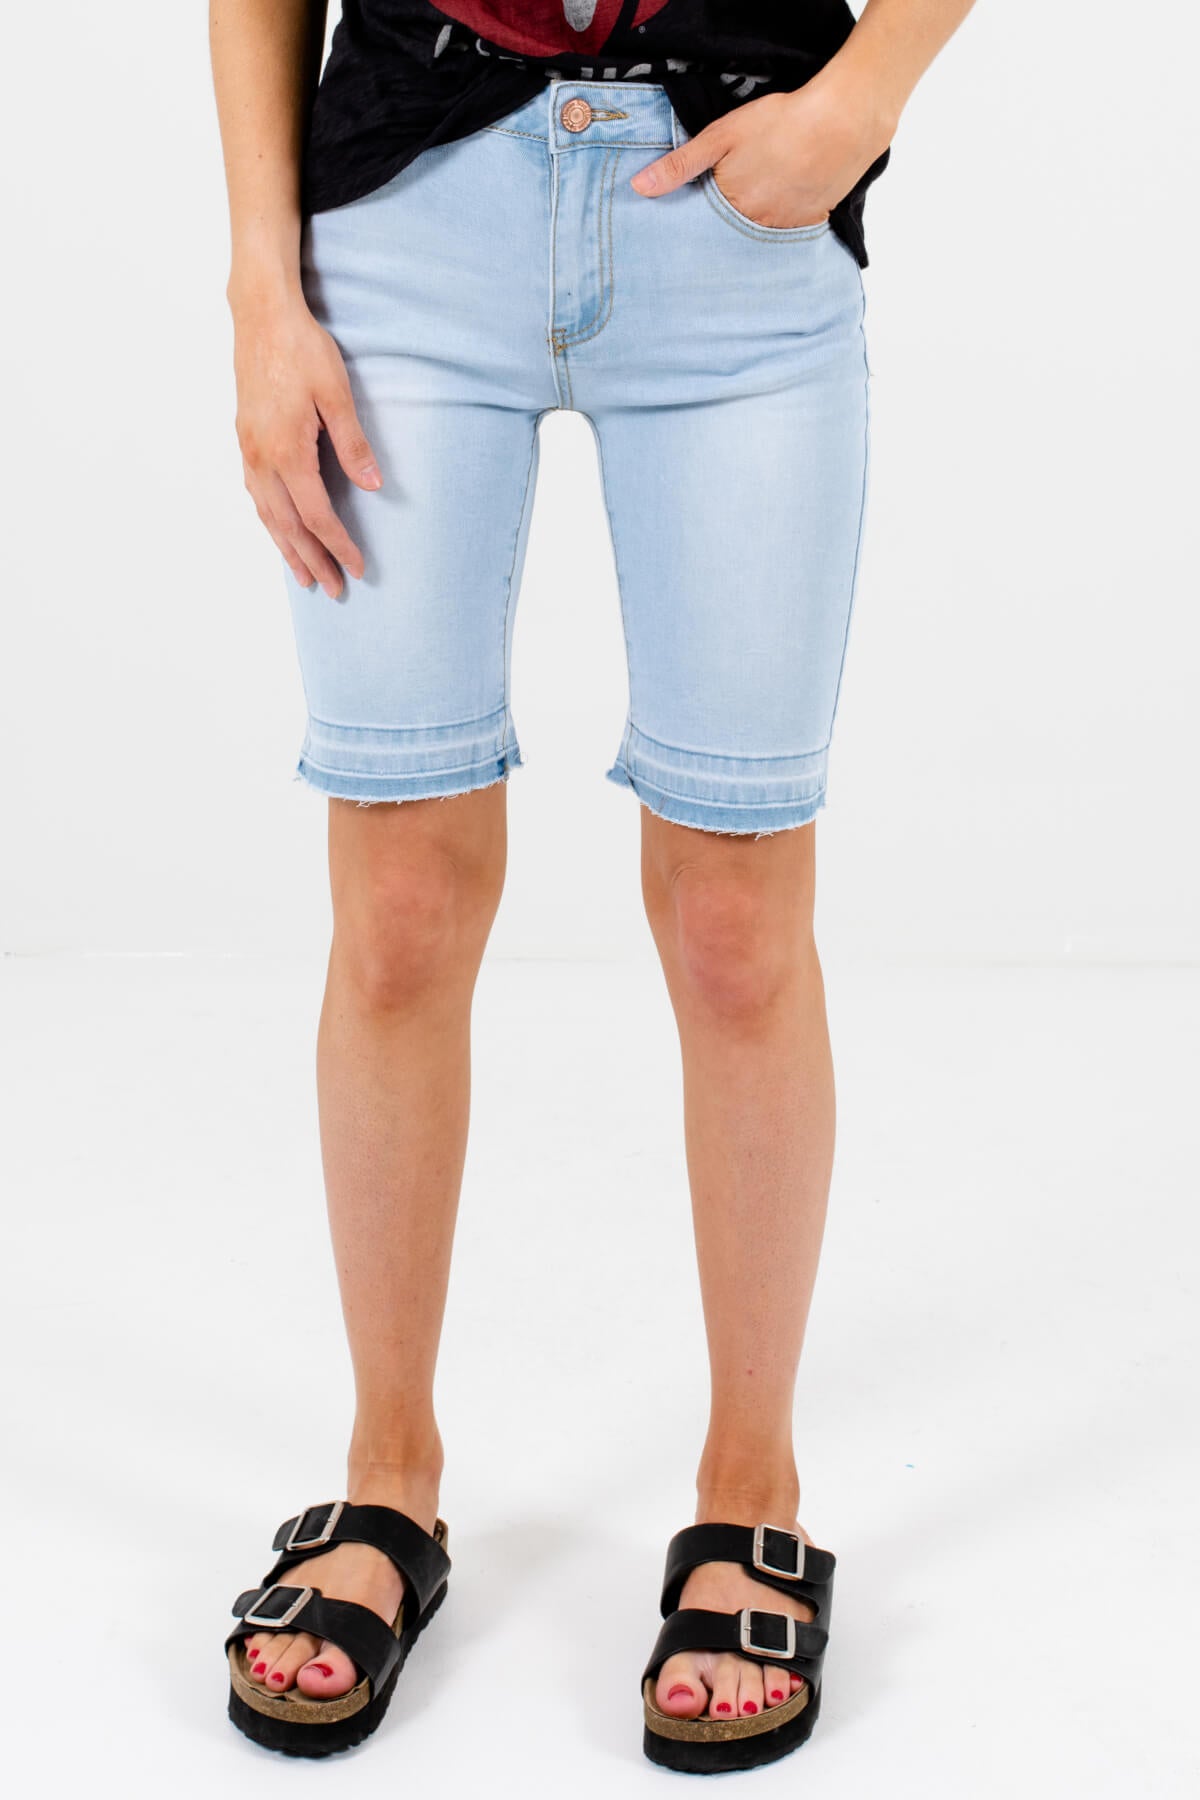 blue jean bermuda shorts